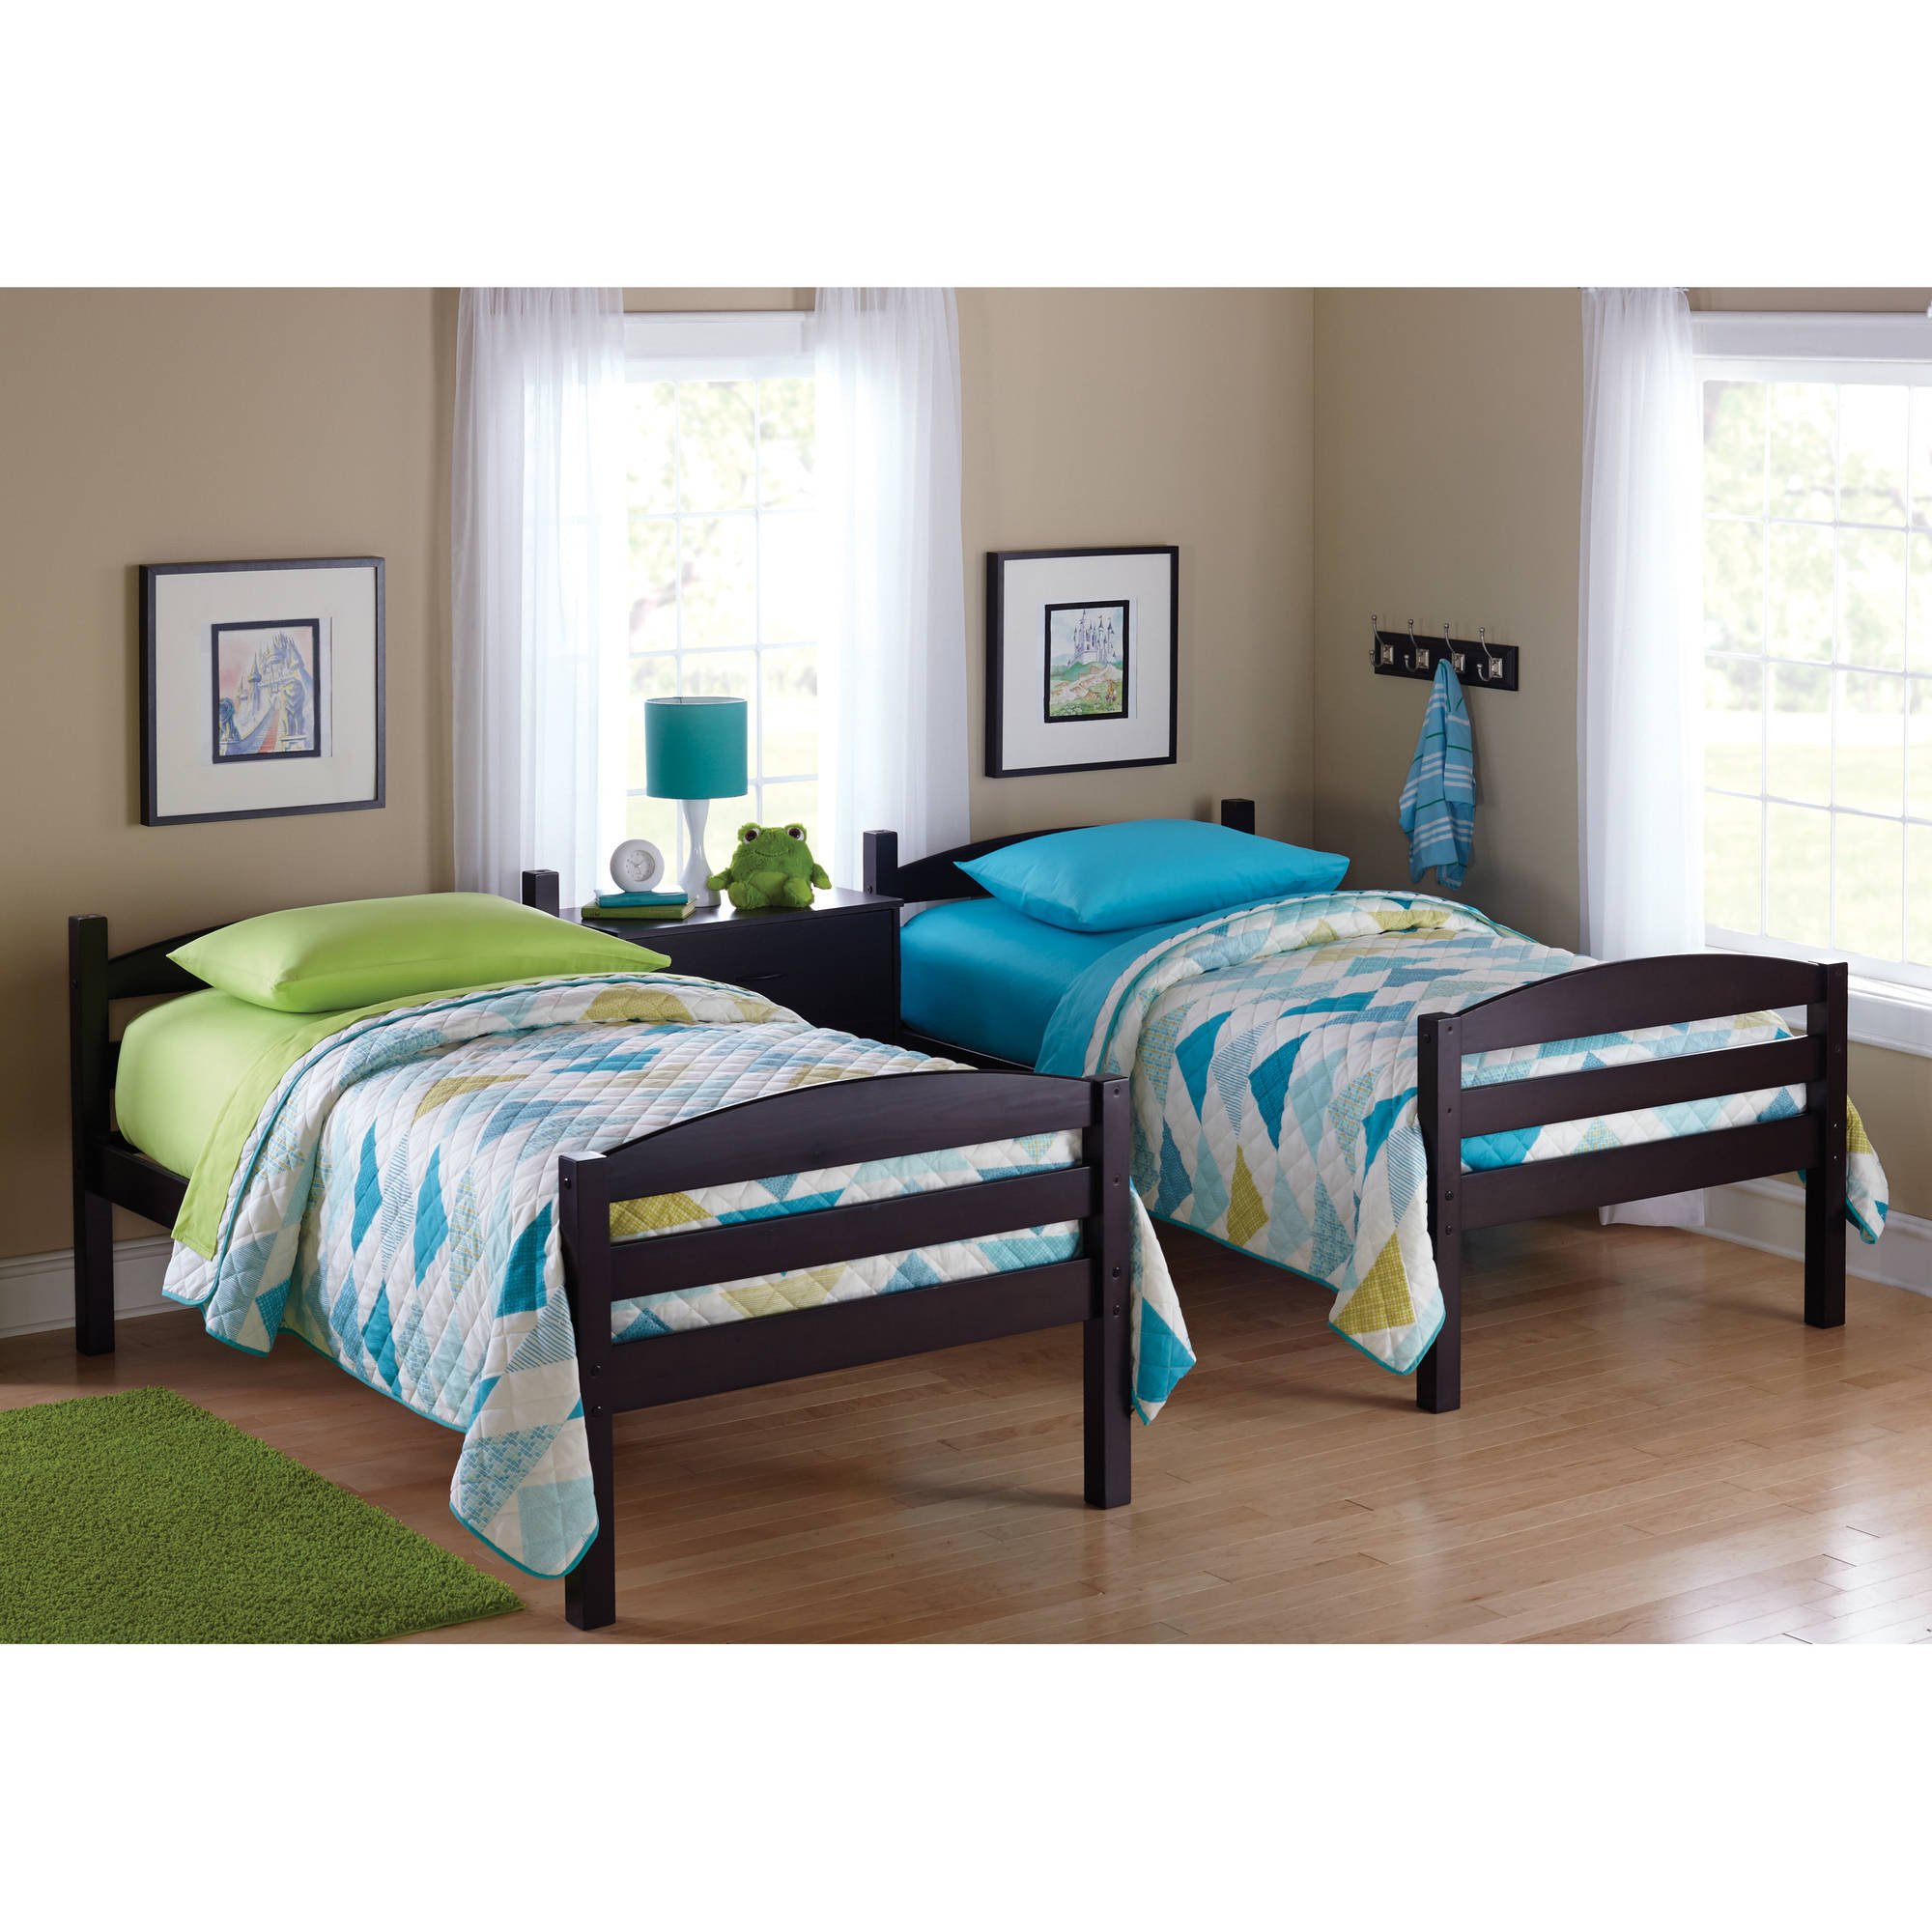 Kids Loft Bedroom Set
 Bunk Beds Twin Over Twin Kids Furniture Bedroom Ladder